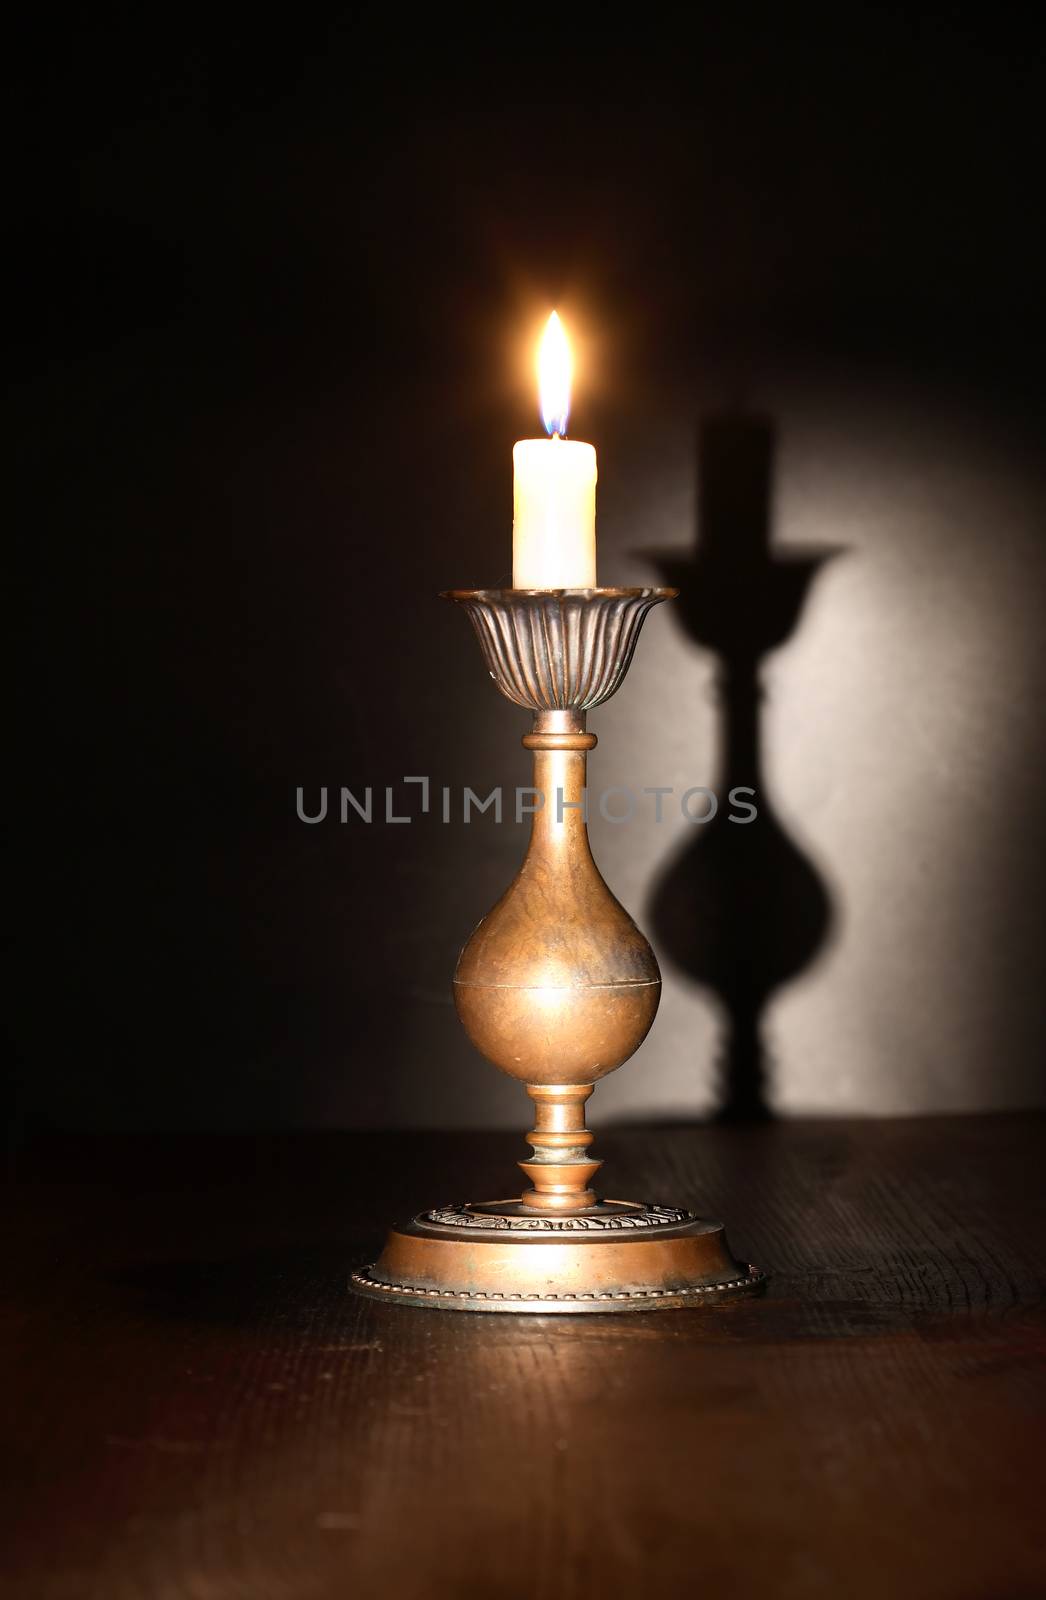 Lighting Candle On Dark by kvkirillov